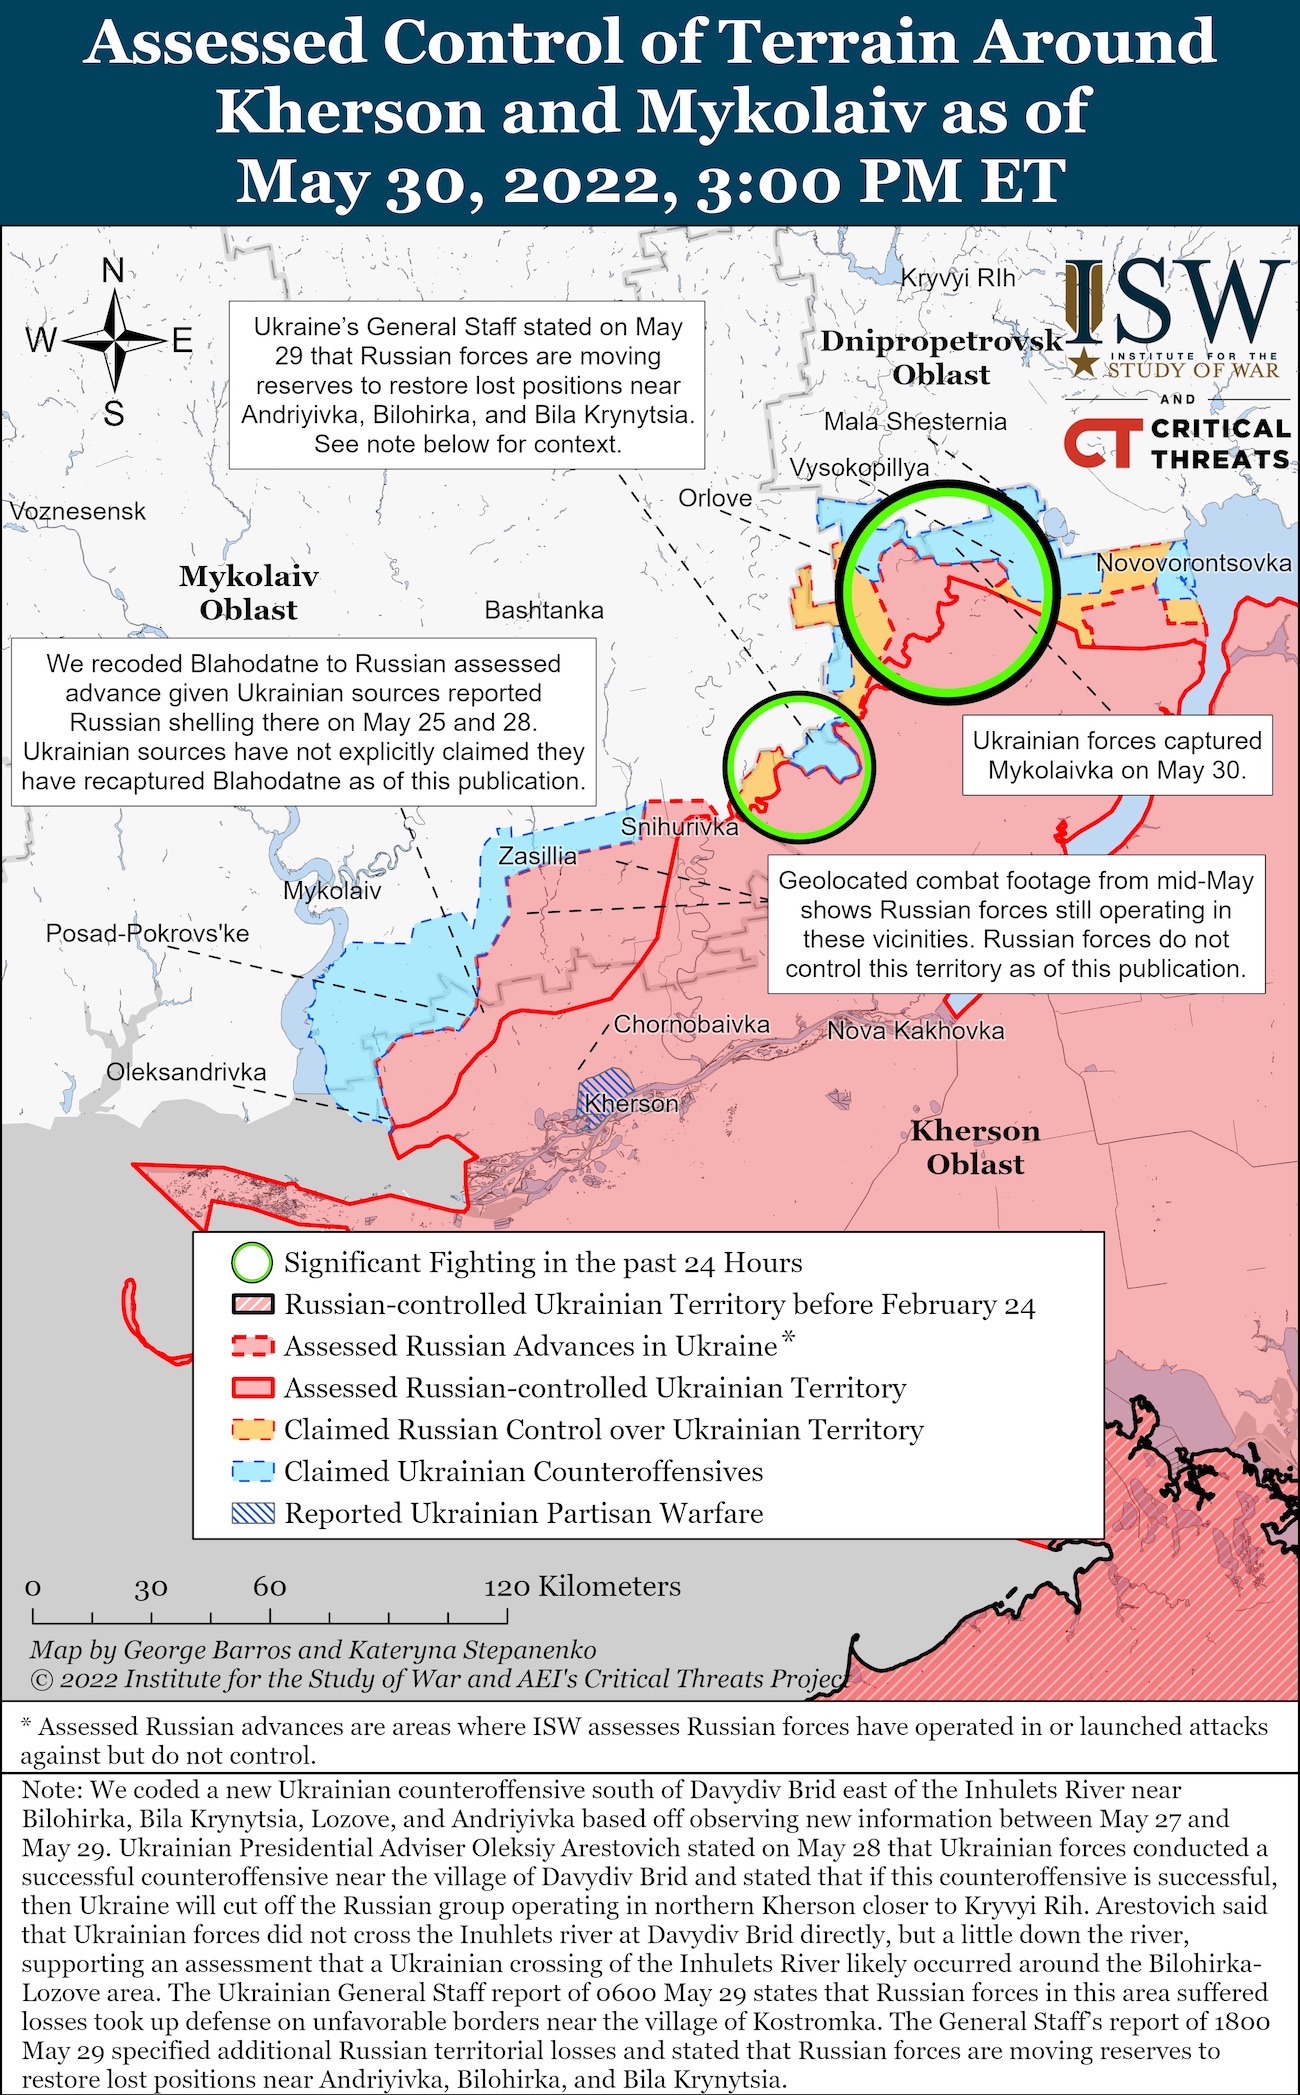 Российские войска безуспешно атаковали плацдарм ВСУ на восточном берегу реки Ингулец – ISW